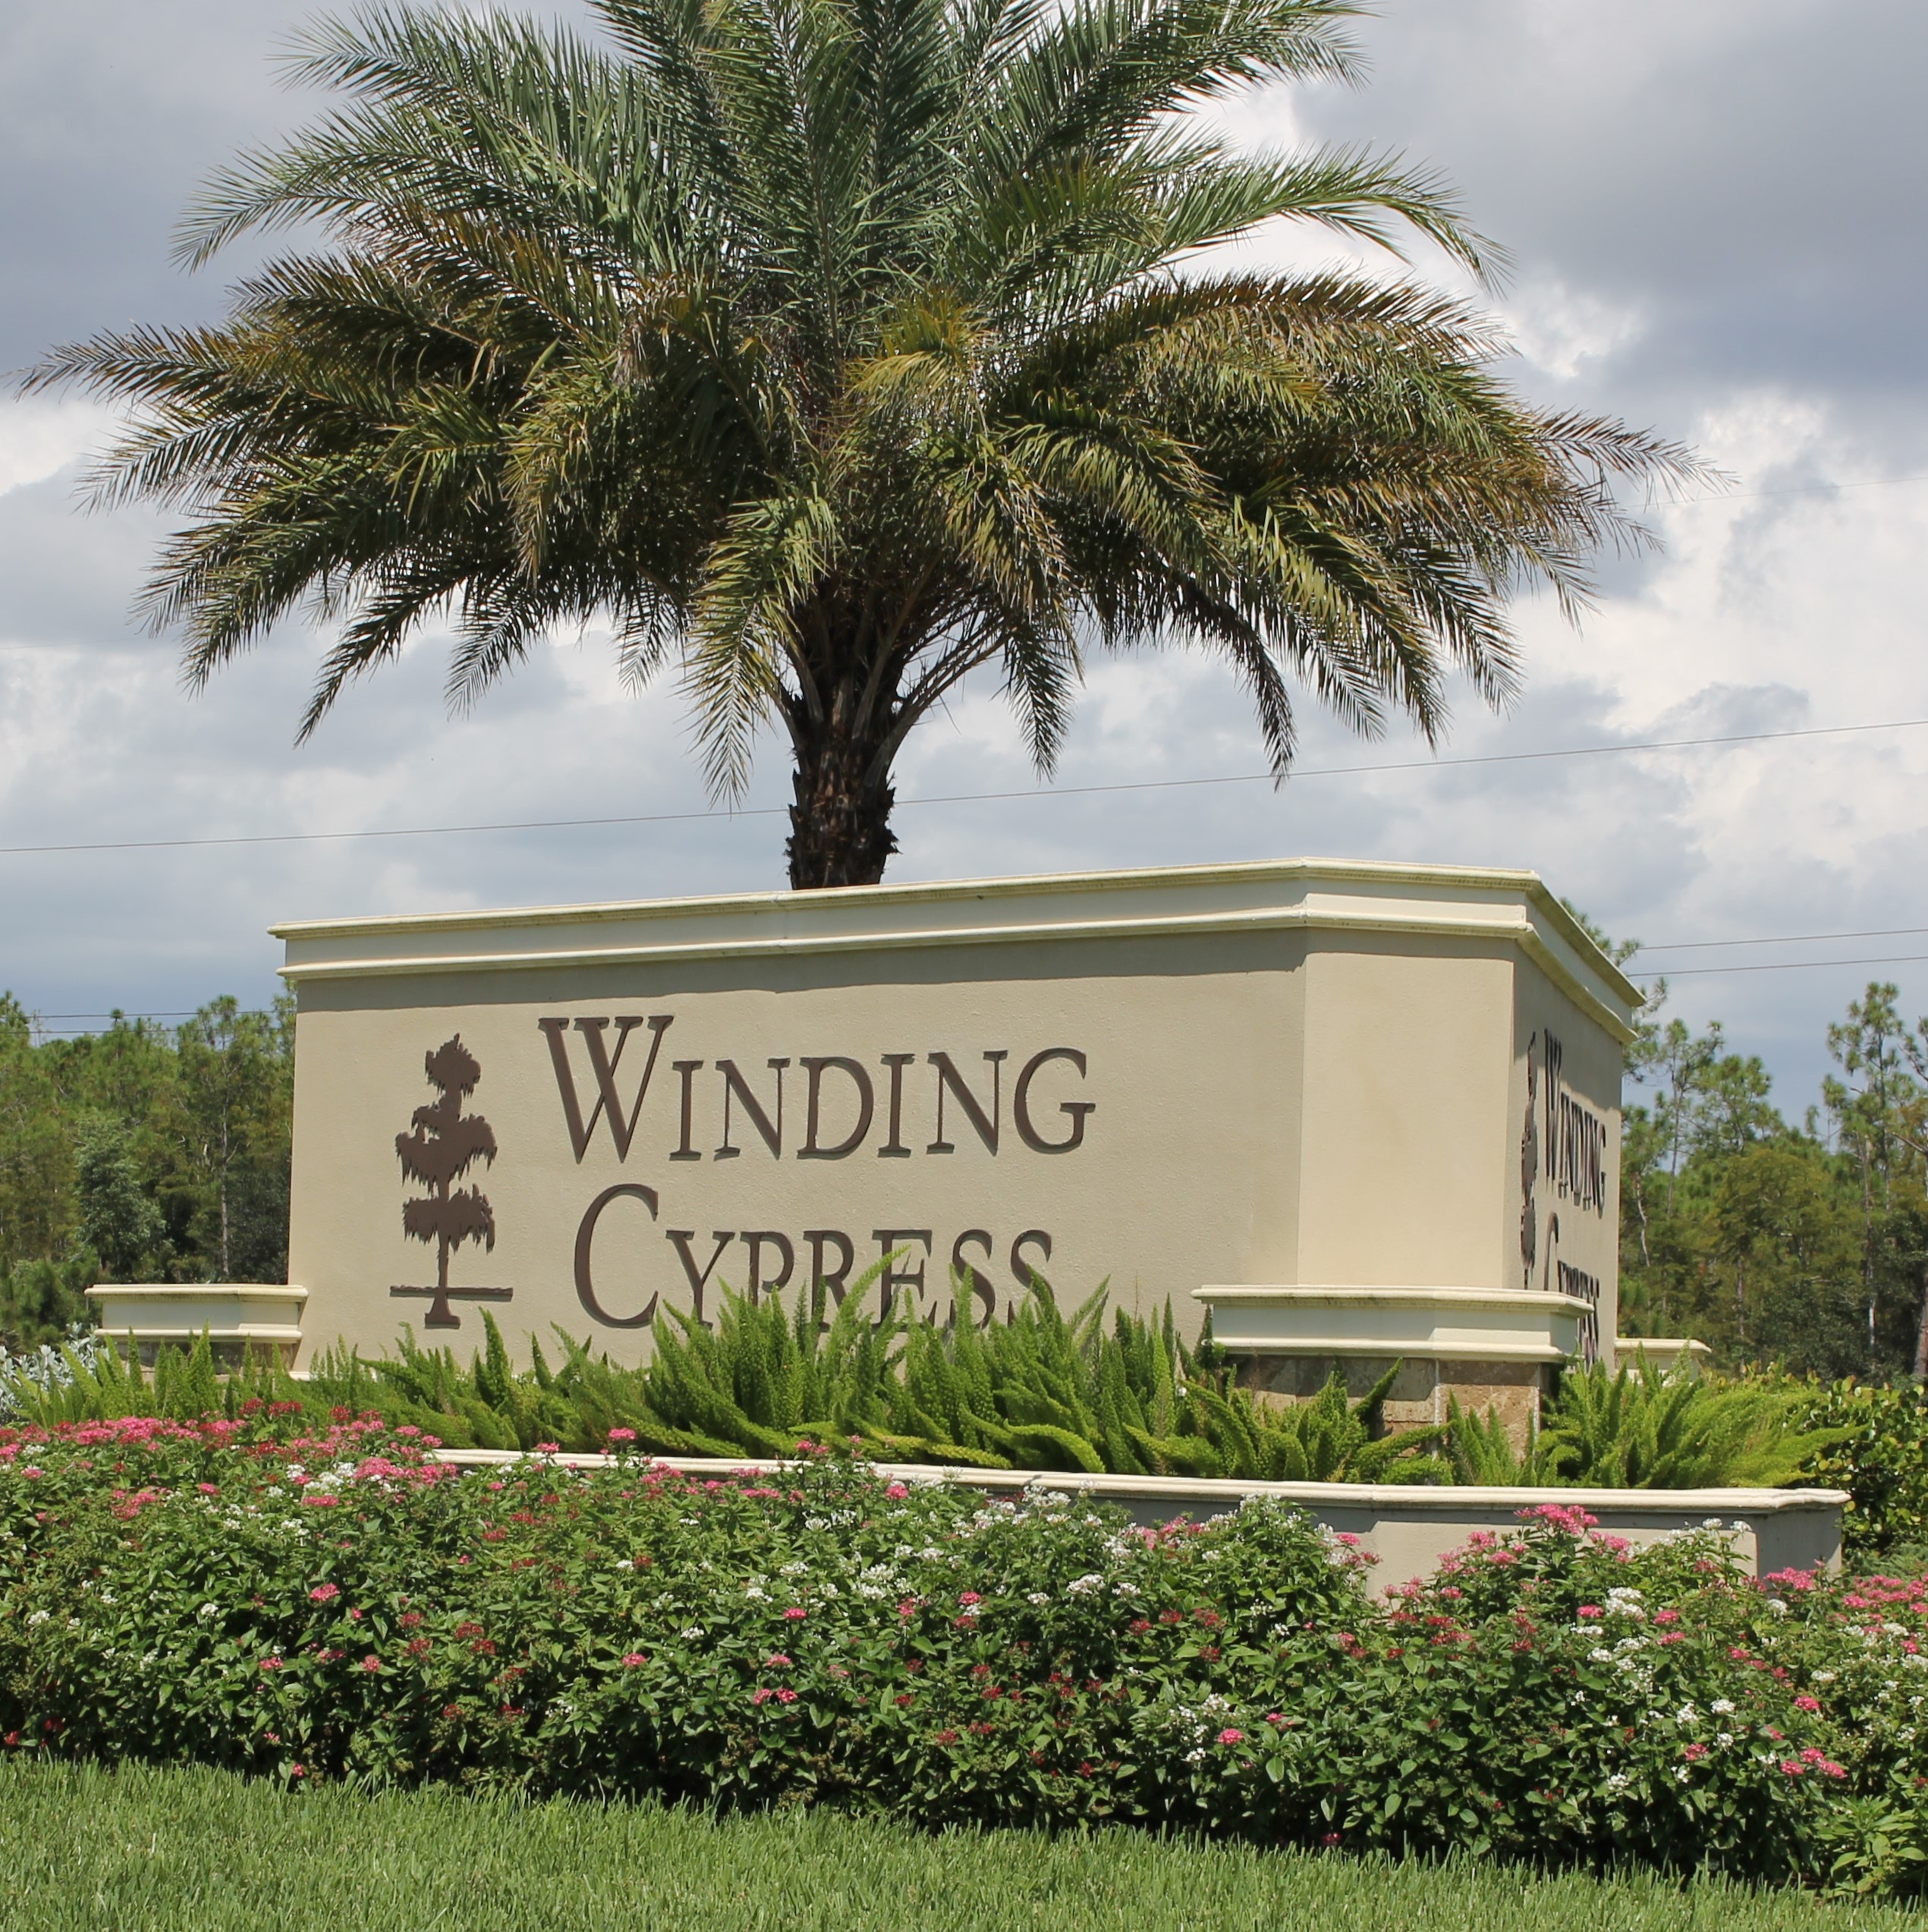 Winding Cypress homes for sale and luxury real estate for sale in Winding Cypress, a Marco Island community and luxury neighborhood in Marco Island Florida.